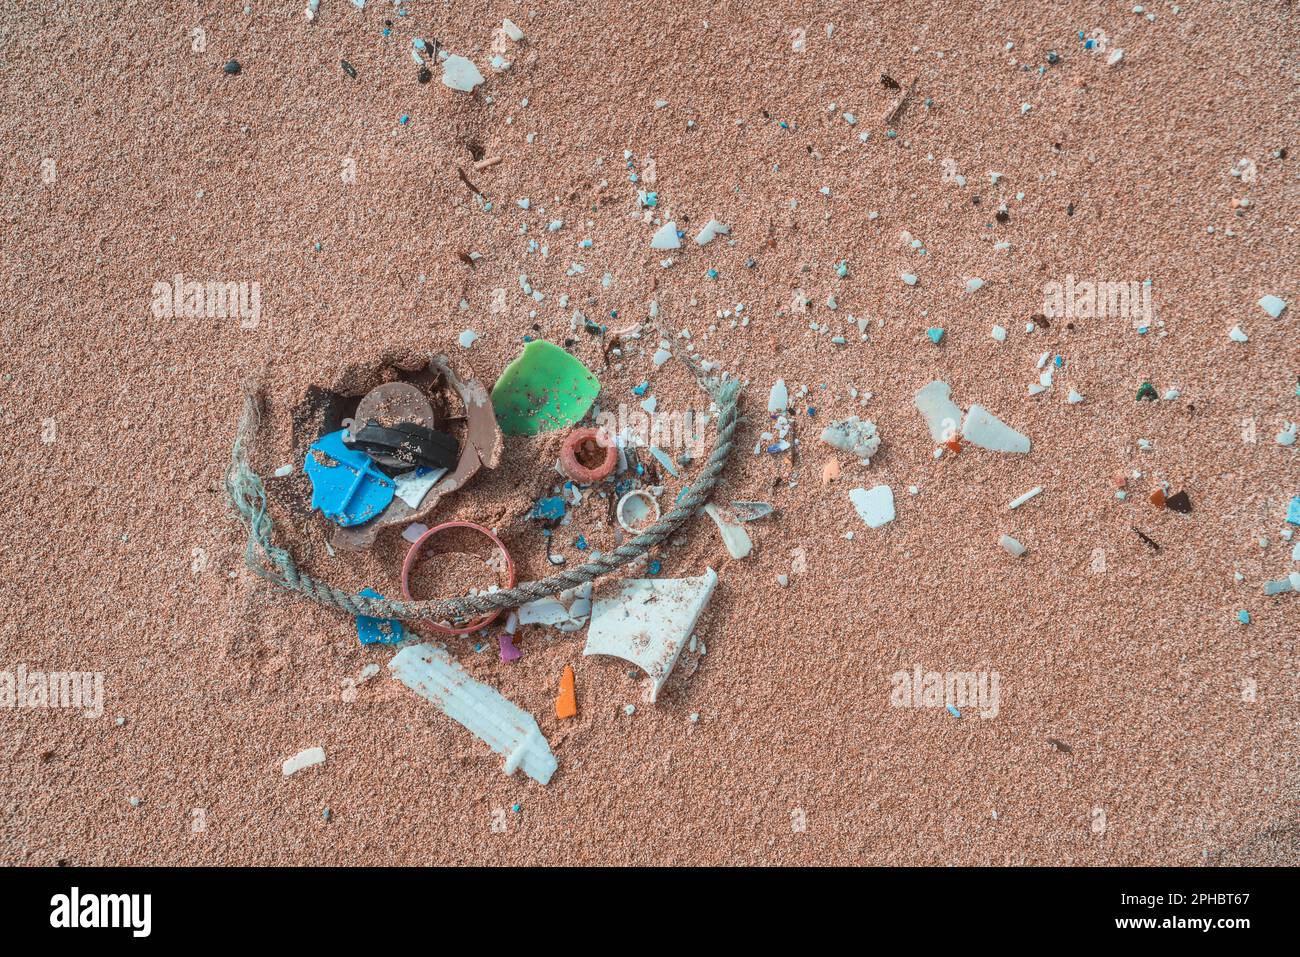 Plastic pollution on shore of beach. Ocean microplastic marine debris Stock Photo